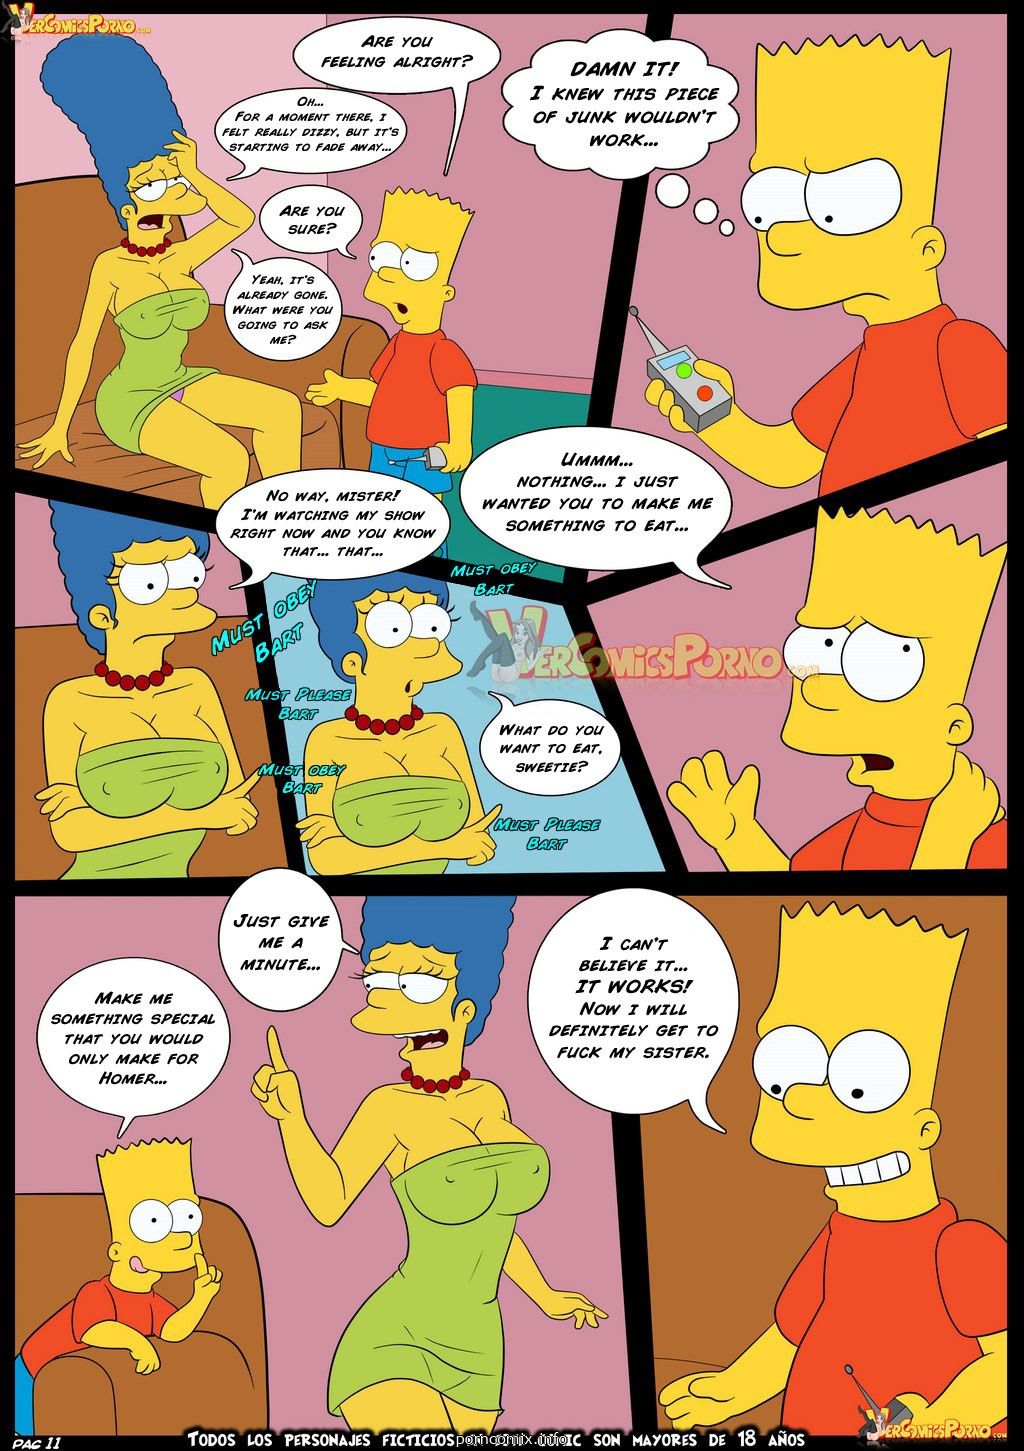 [CROC] The Simpsons / Futurama - Future purchase page 12